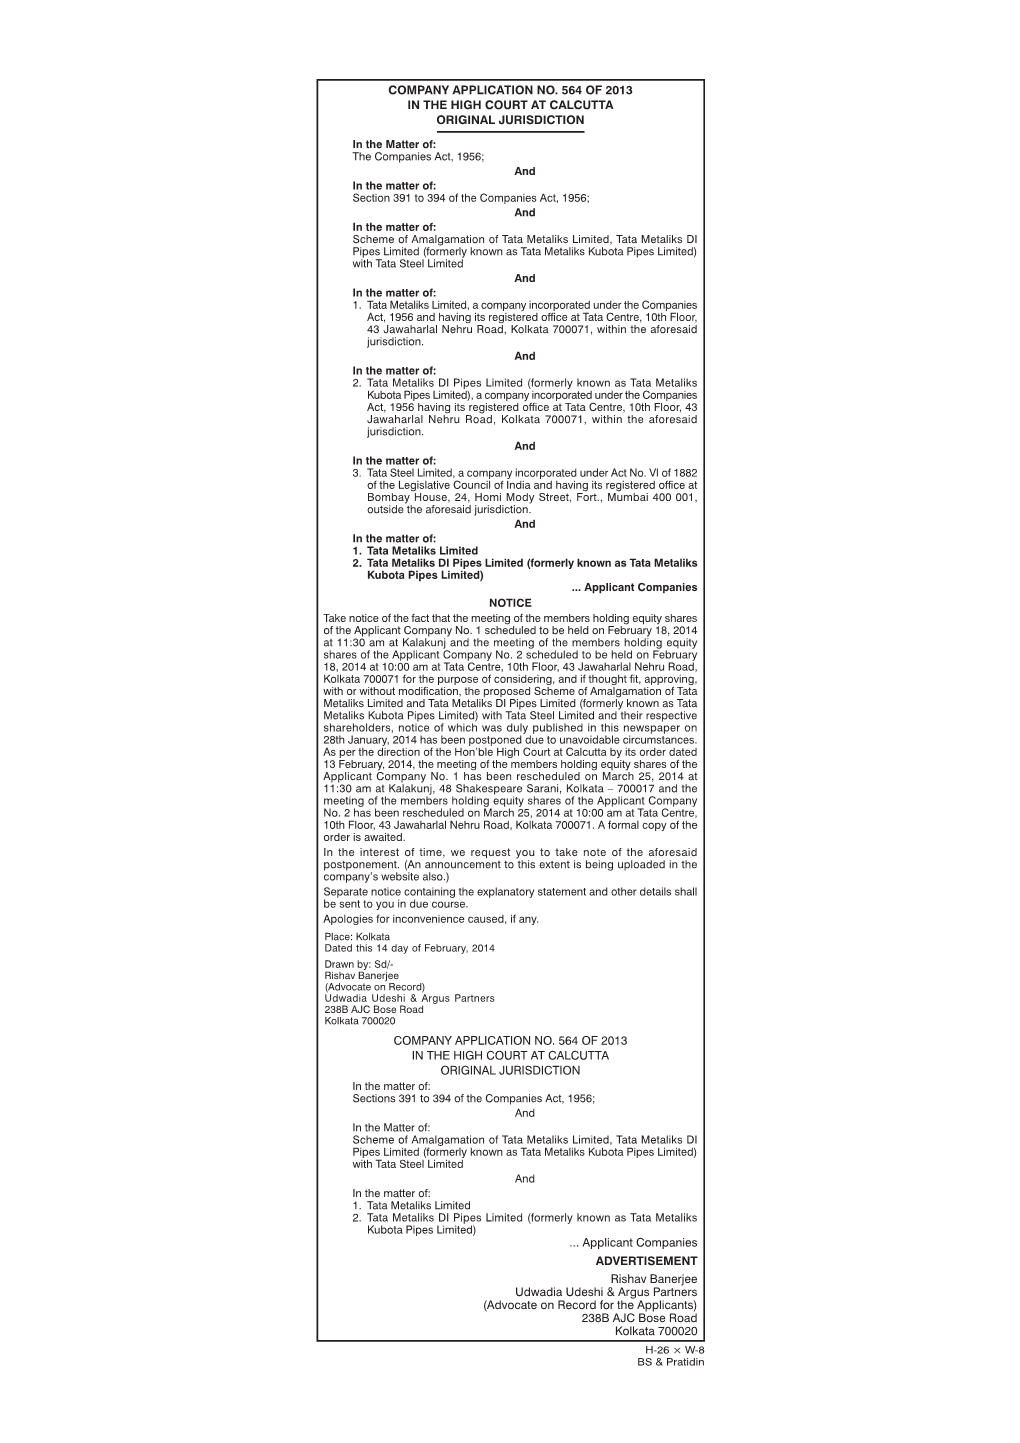 Company Application No. 564 of 2013 in the High Court at Calcutta Original Jurisdictiondownload